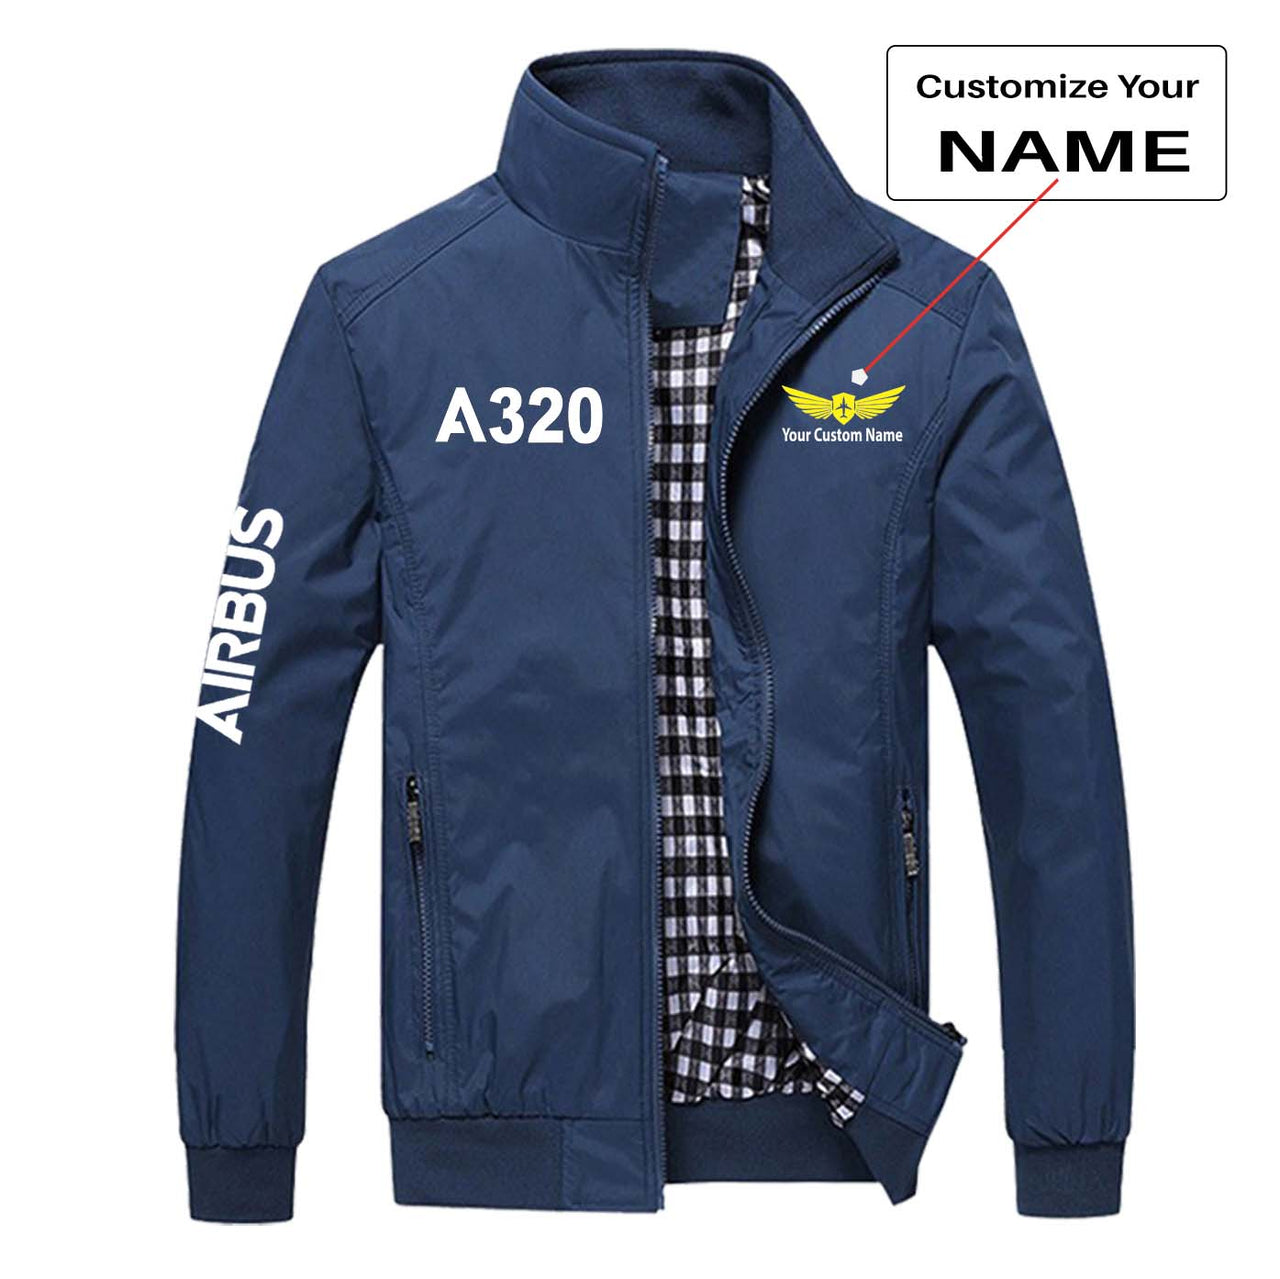 A320 Flat Text Designed Stylish Jackets